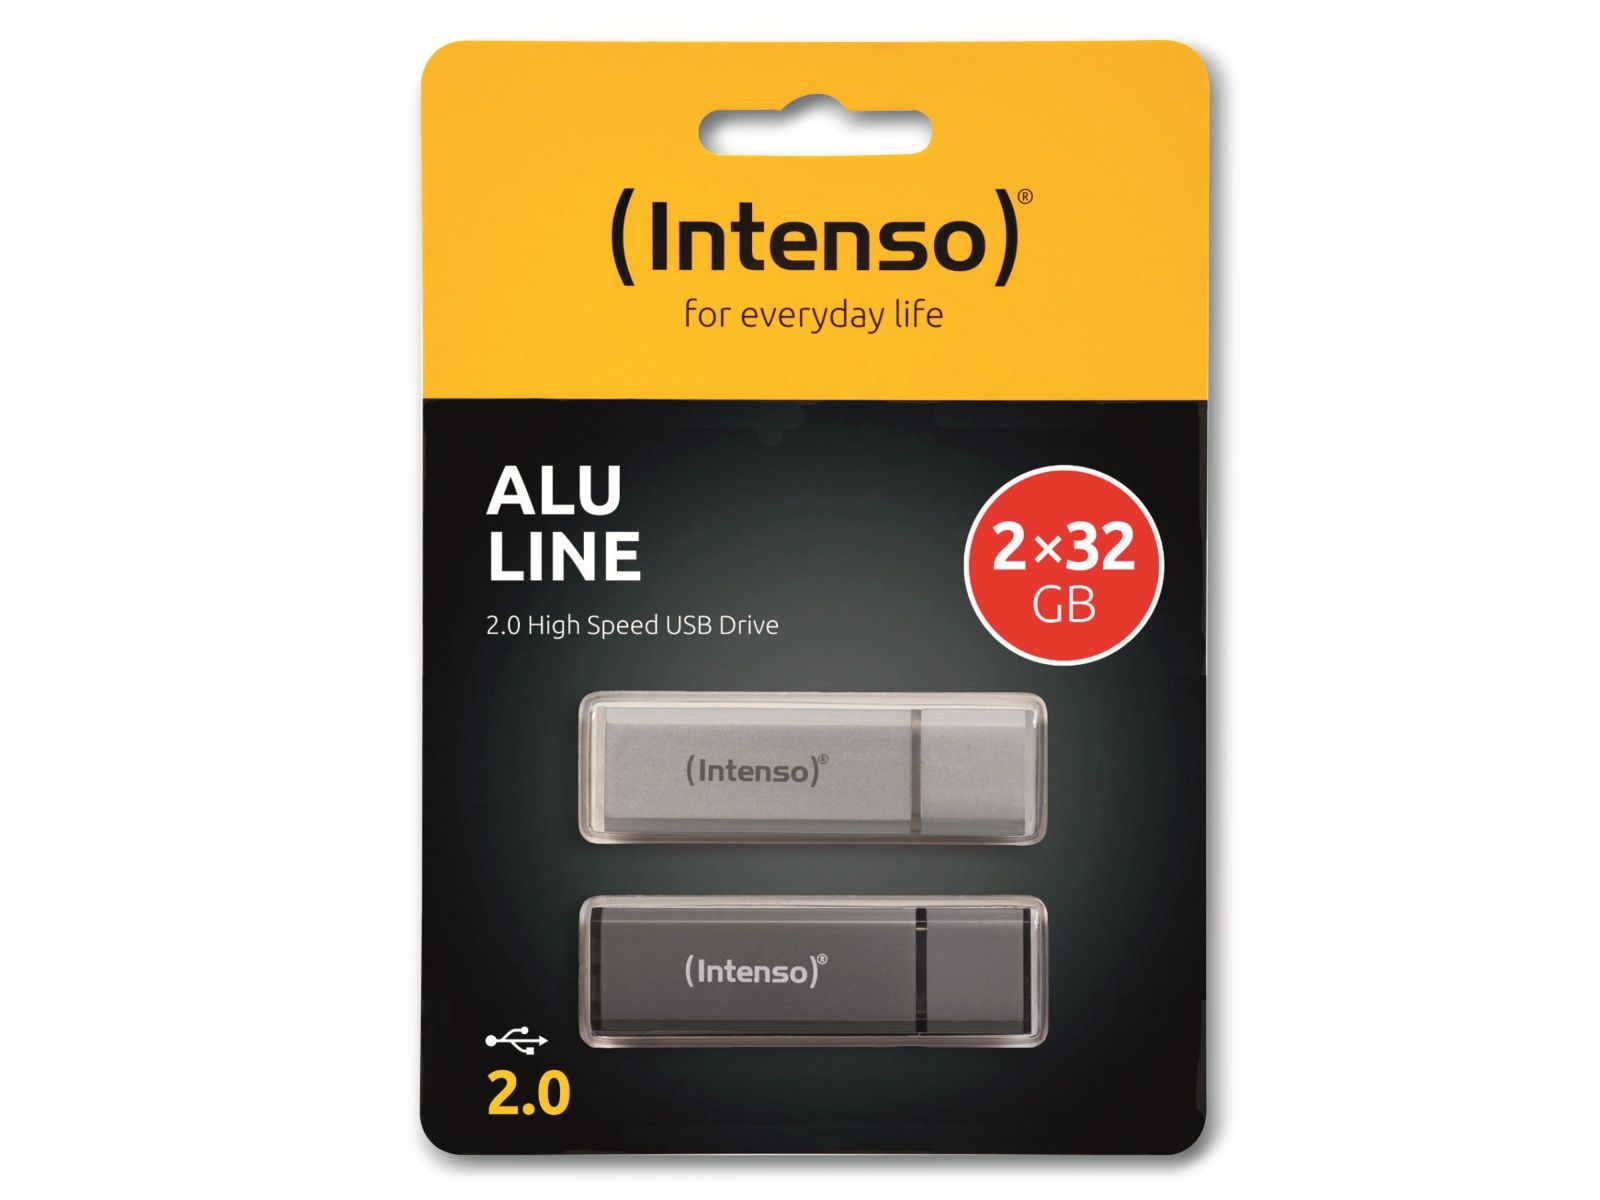 INTENSO USB-Stick Alu Line, 2x 32 GB von Intenso